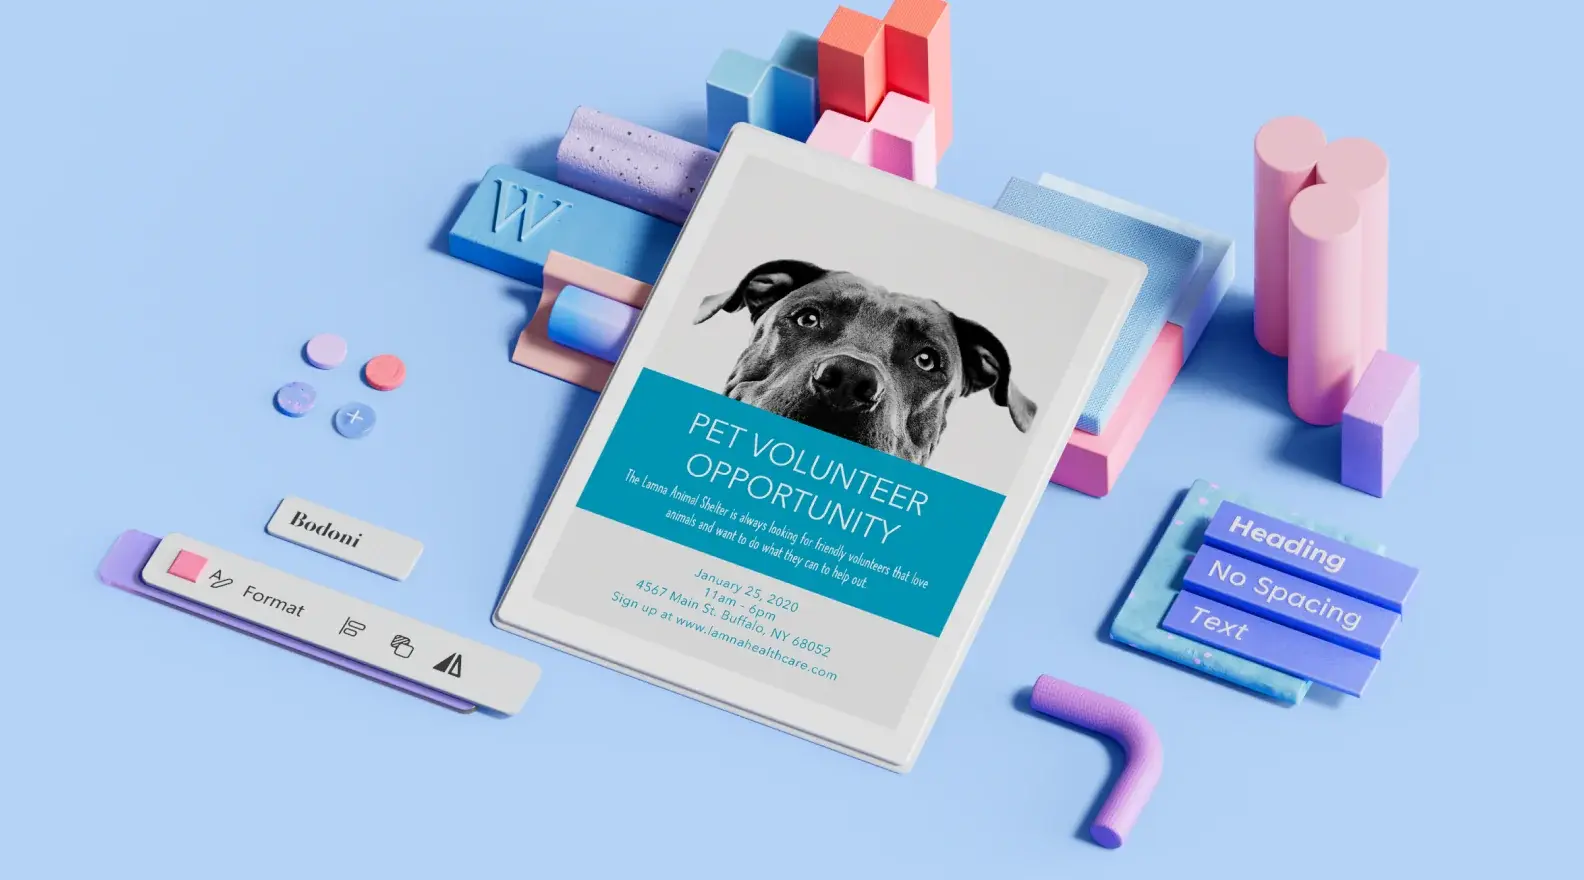 Pet shelter volunteer flyer template surrounded by 3D design elements